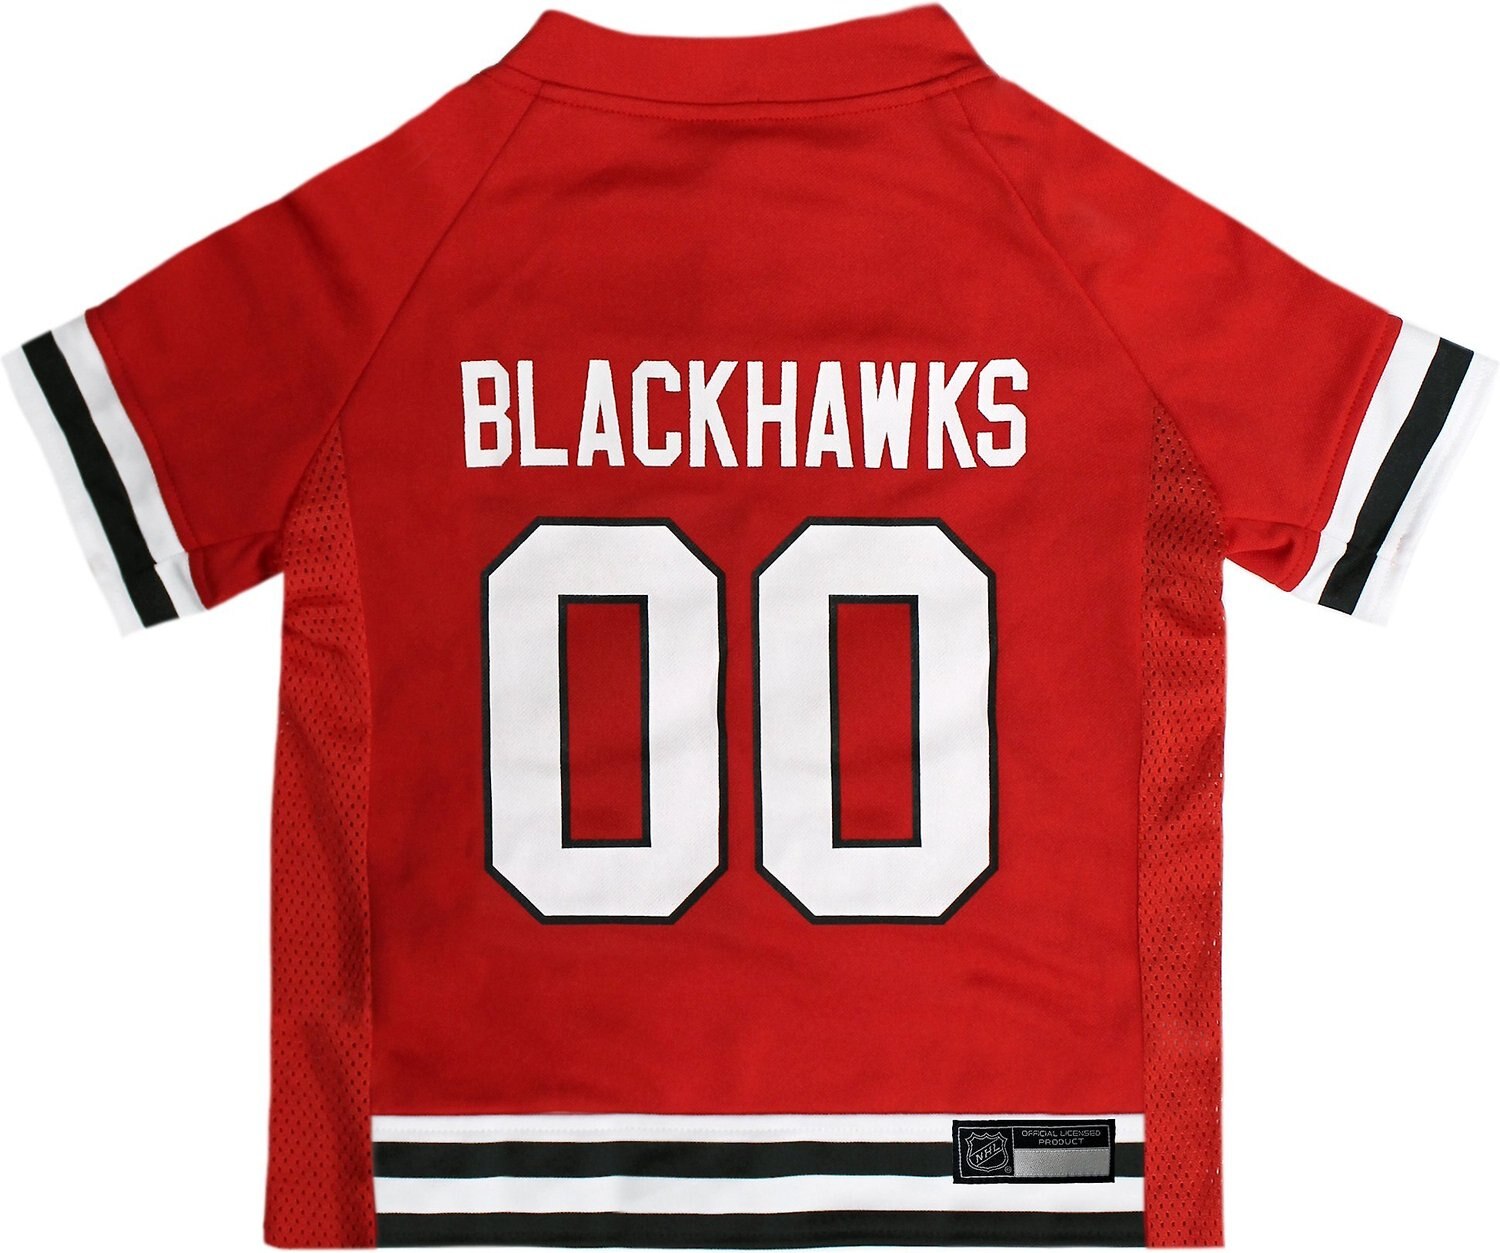 blackhawks dog jersey